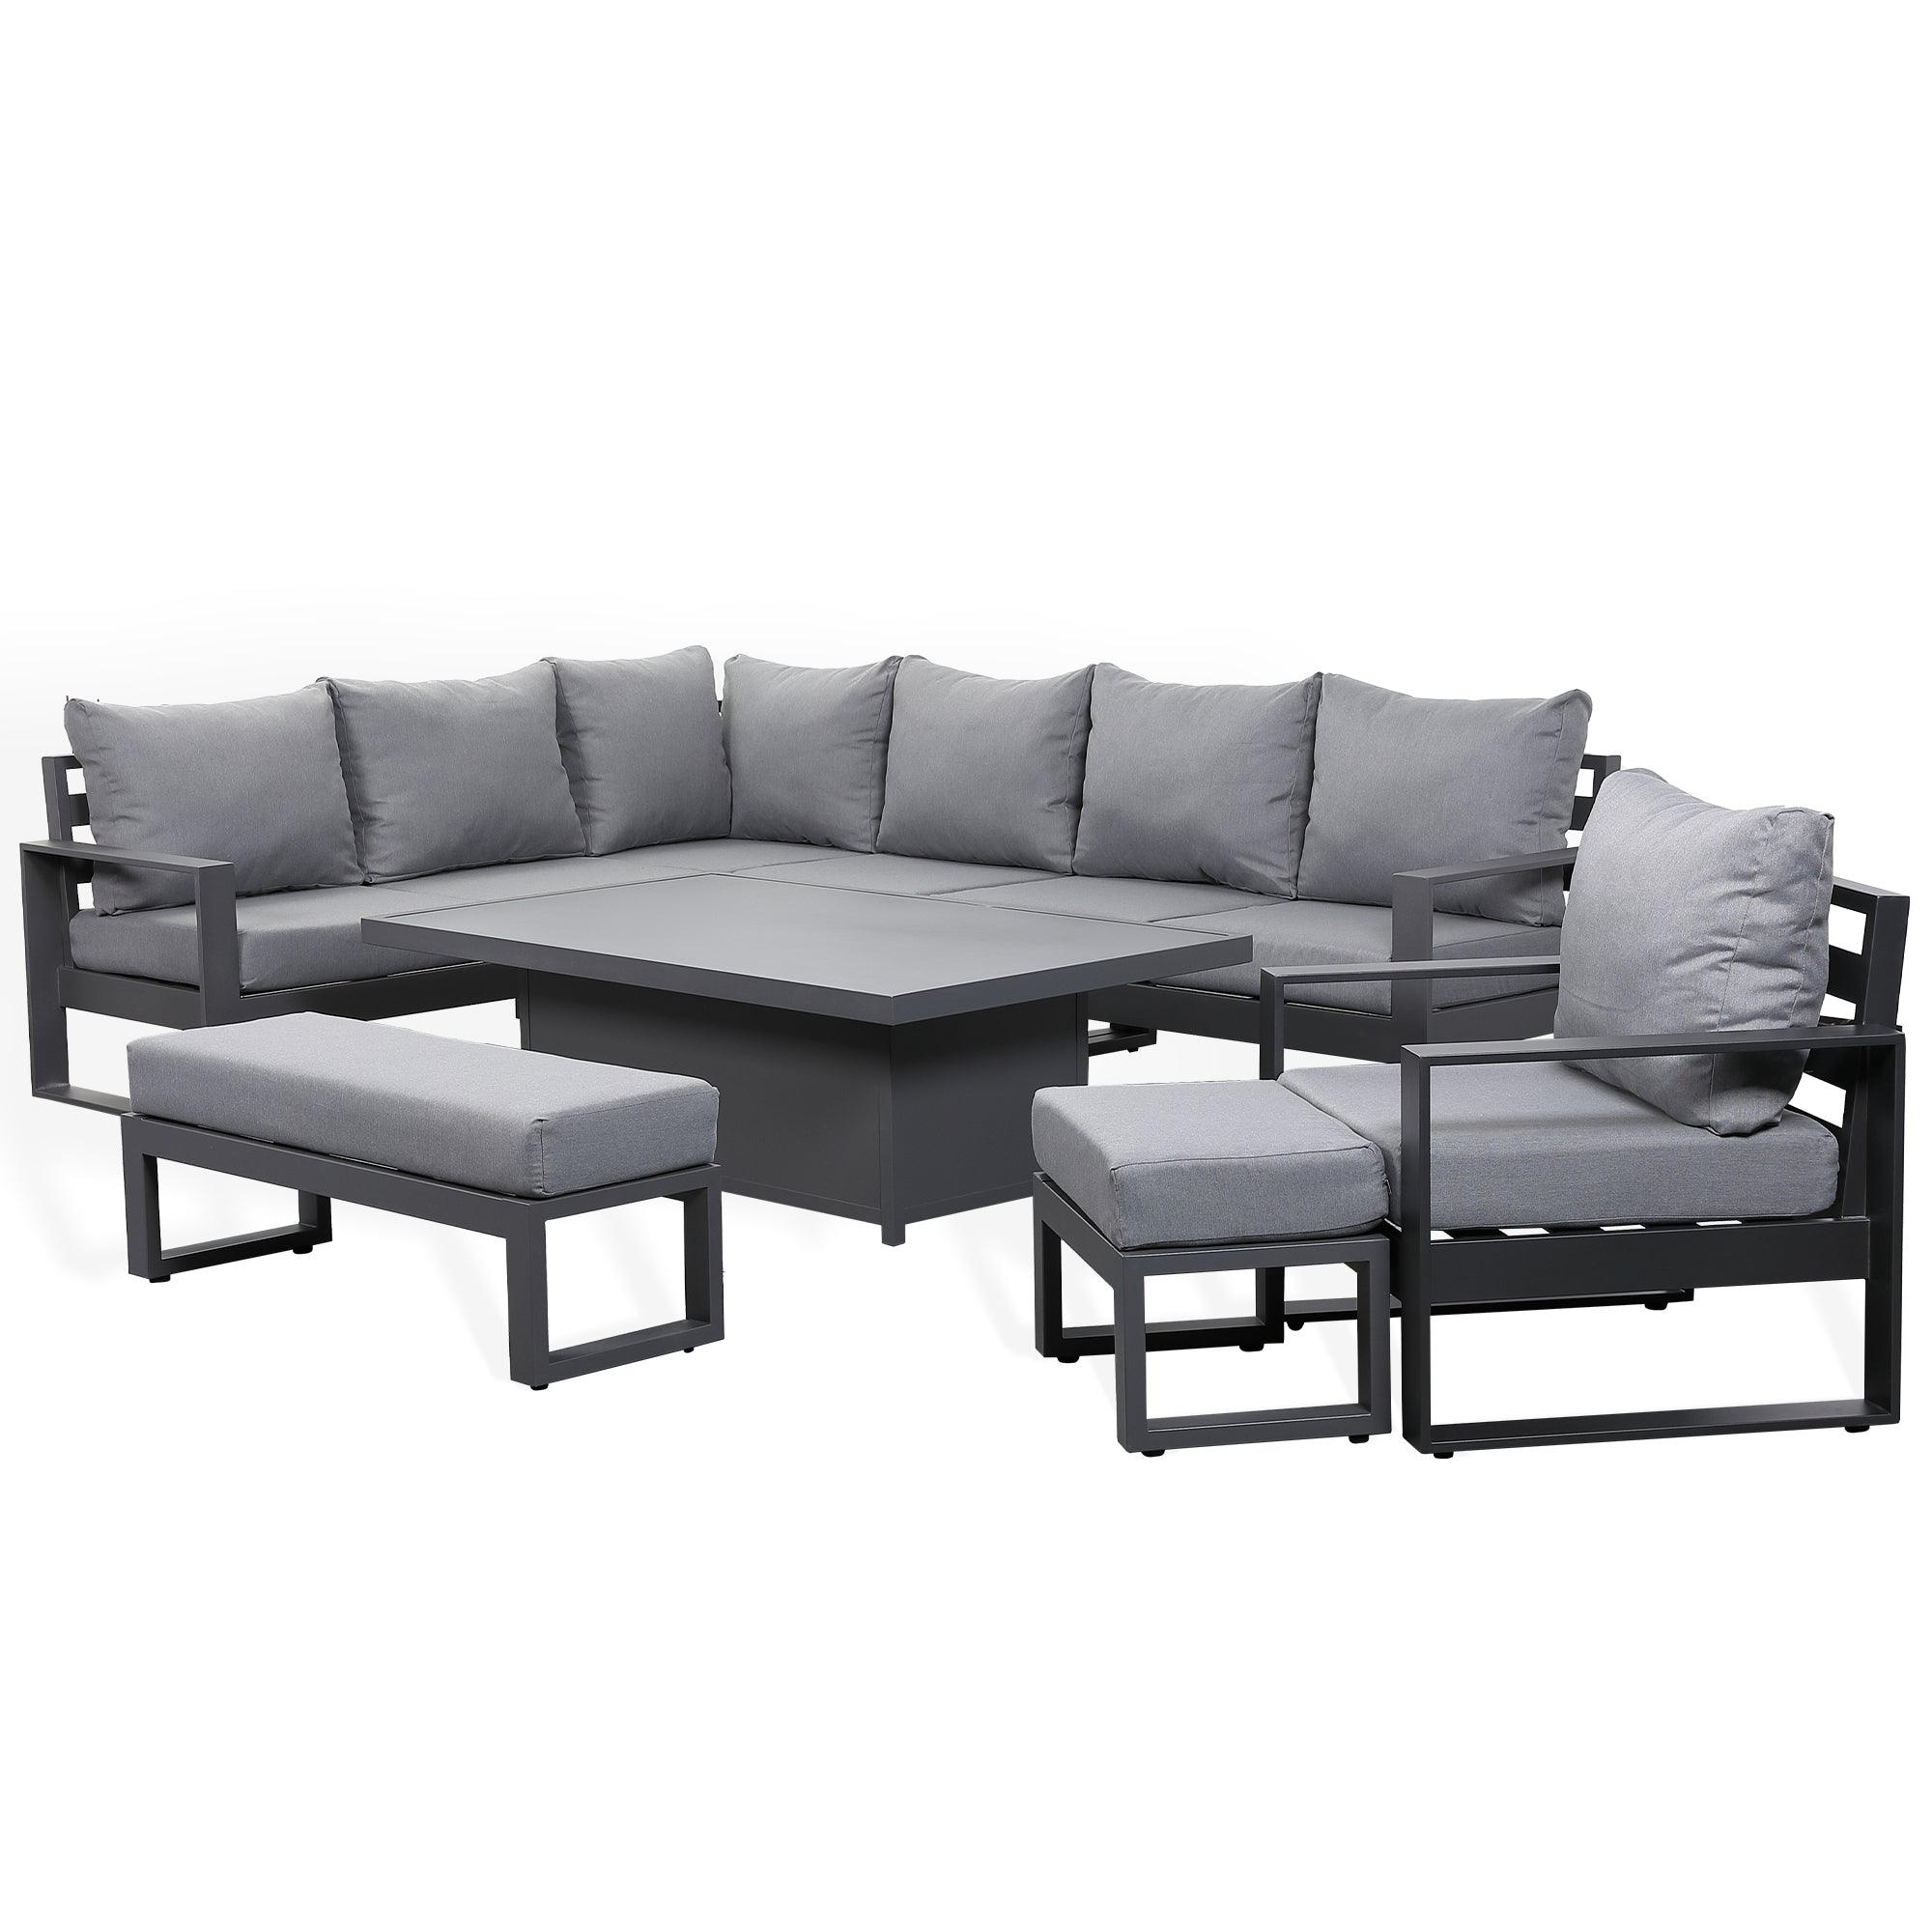 Halo Range Elite LHF Corner Sofa Set - Charcoal Aluminium Frame with Grey cushions